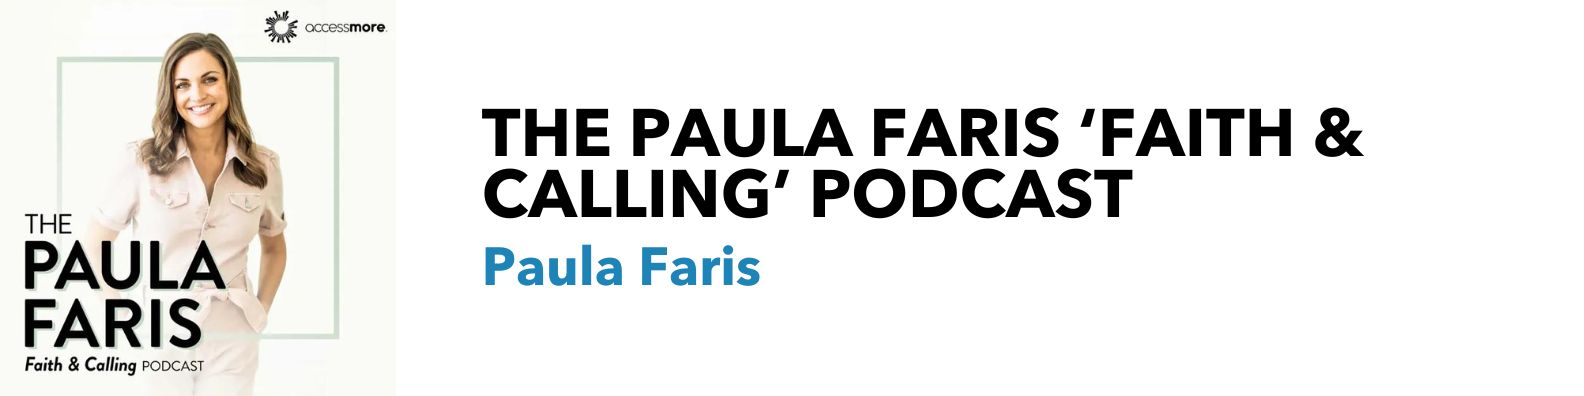 <a href="https://podcasts.apple.com/us/podcast/the-paula-faris-faith-calling-podcast/id1550996910">Listen on Apple Podcasts</a>